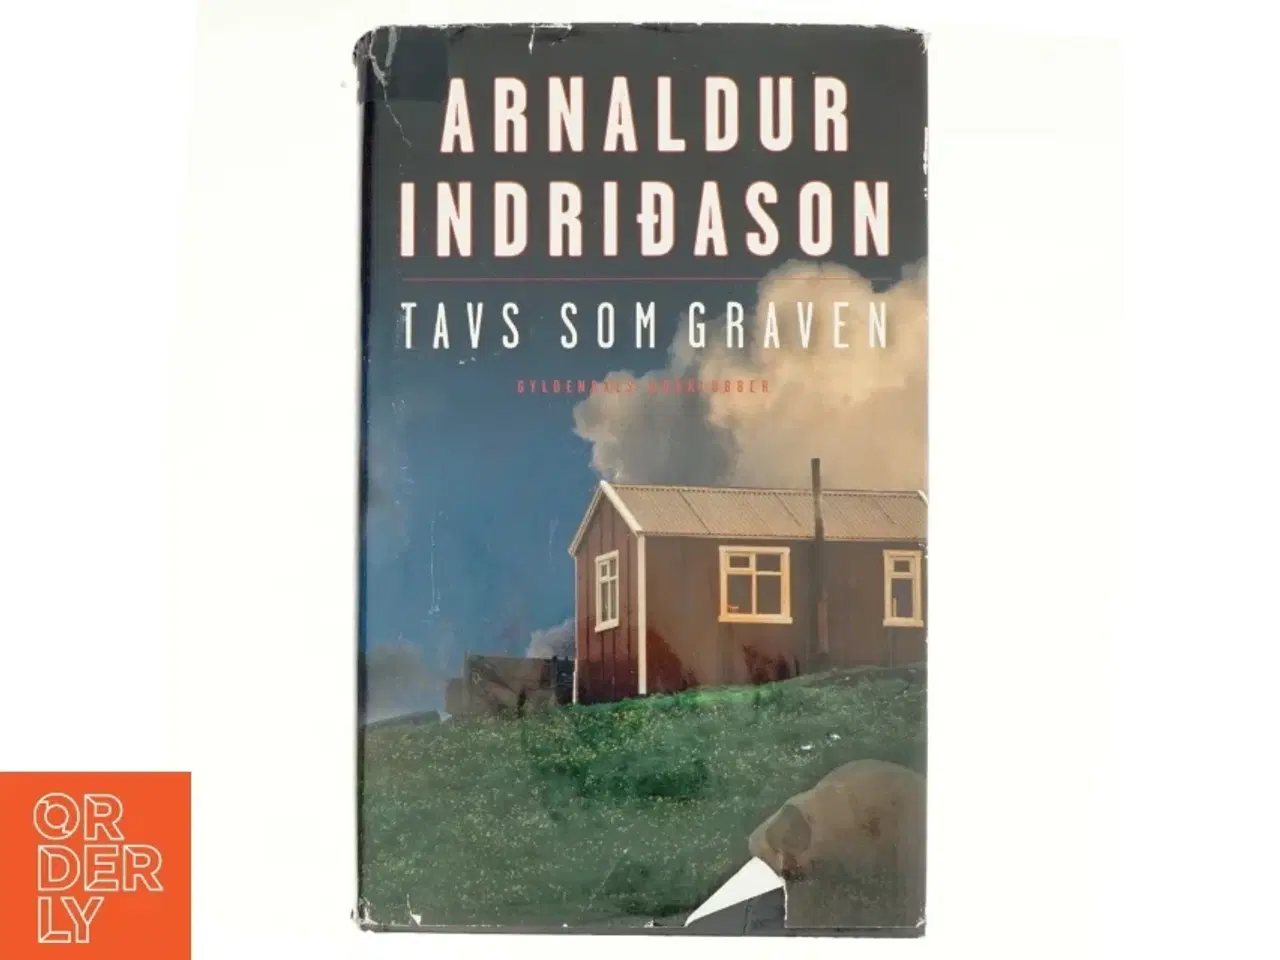 Billede 1 - Tavs som graven : kriminalroman af Arnaldur Indriðason (Bog)